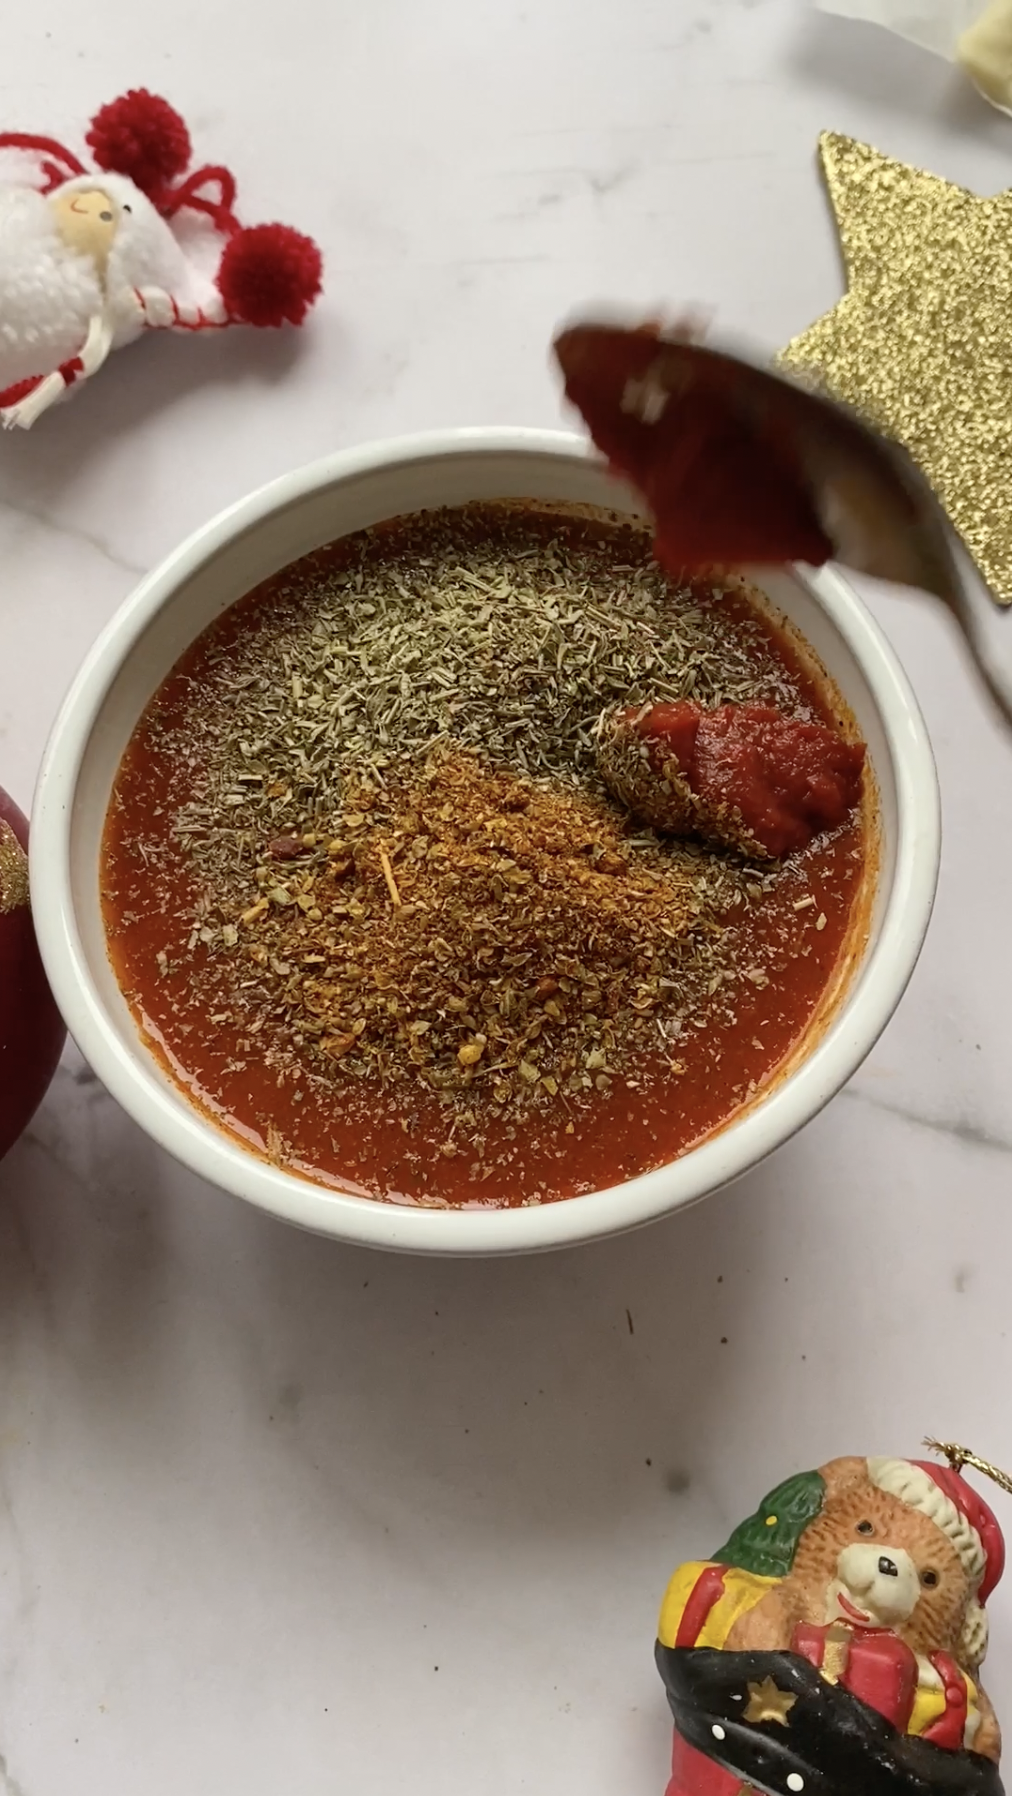 Tomato paste added to the bowl of tomato sauce.